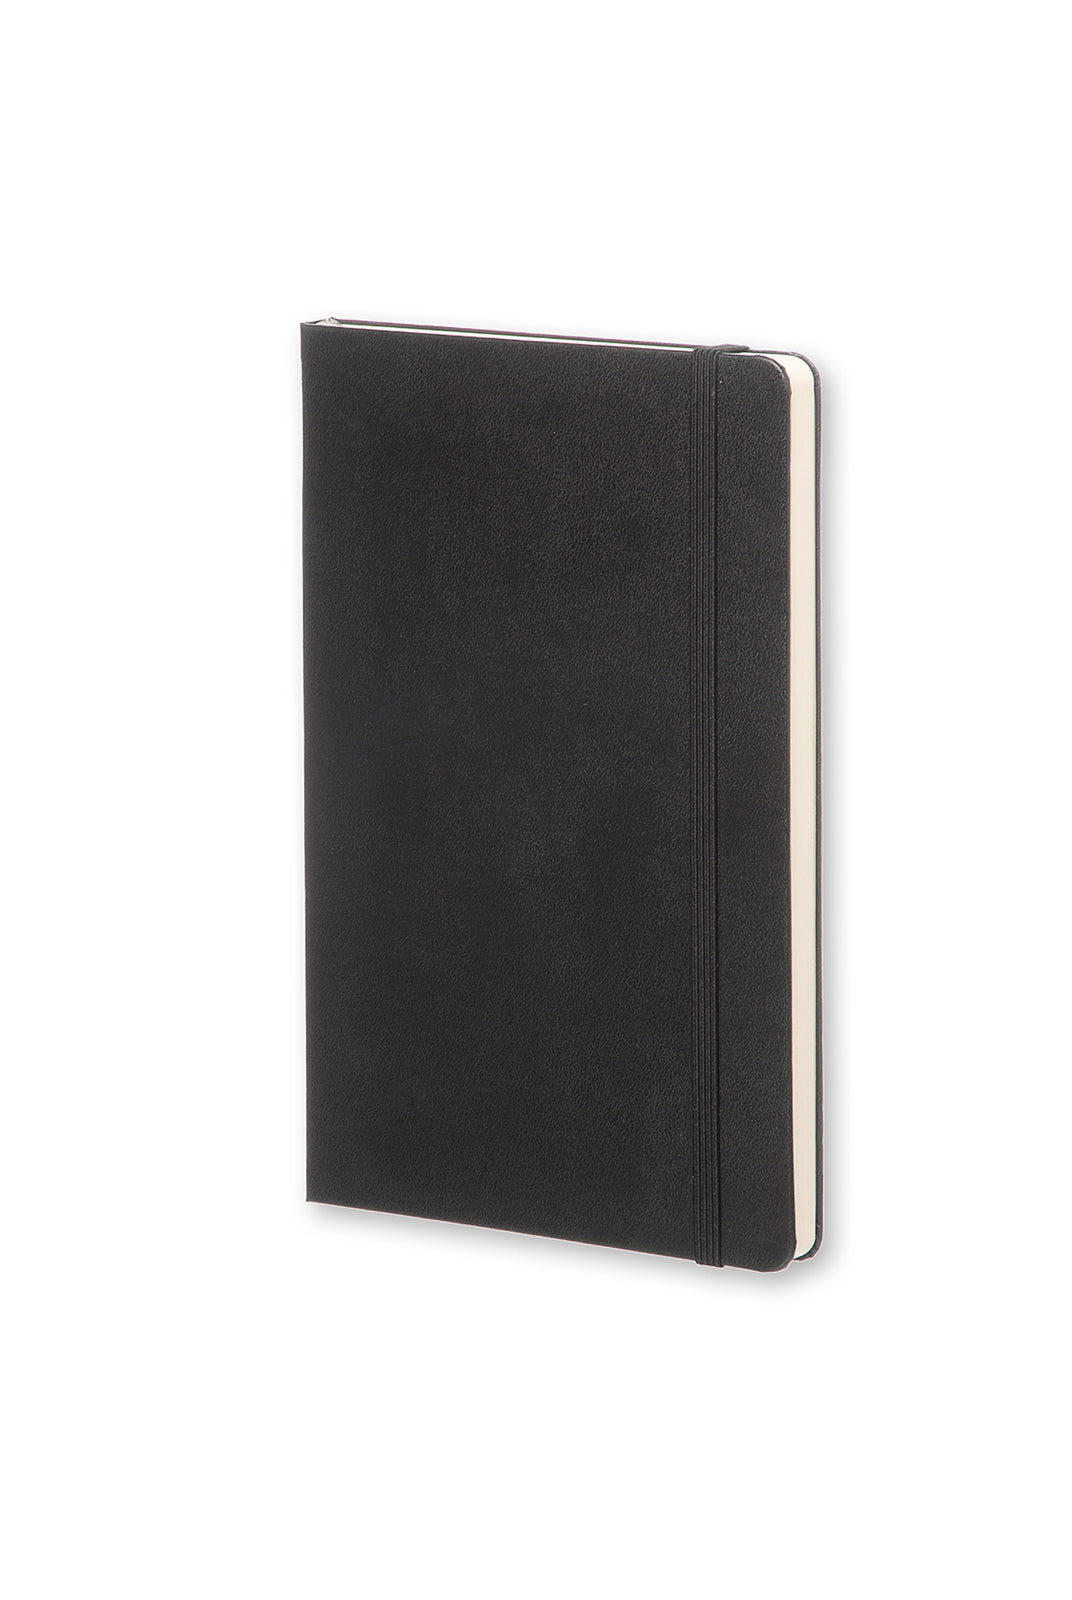 Moleskine - Classic Hard Cover Notebook - Dot Grid - Large - Black